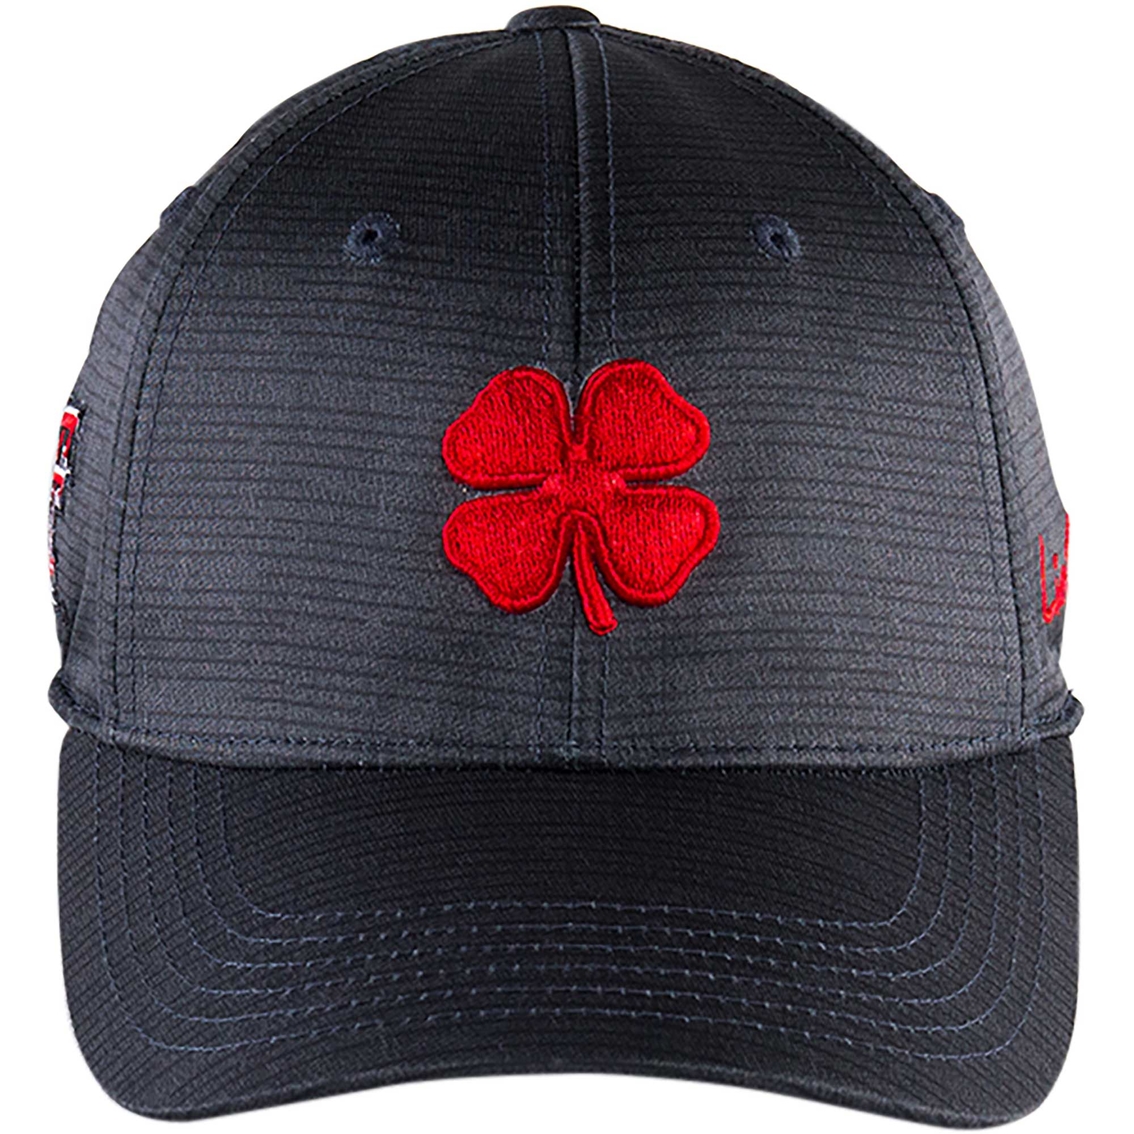 Black Clover Crazy Luck Texas Tech Cap | Hats & Visors | Clothing ...